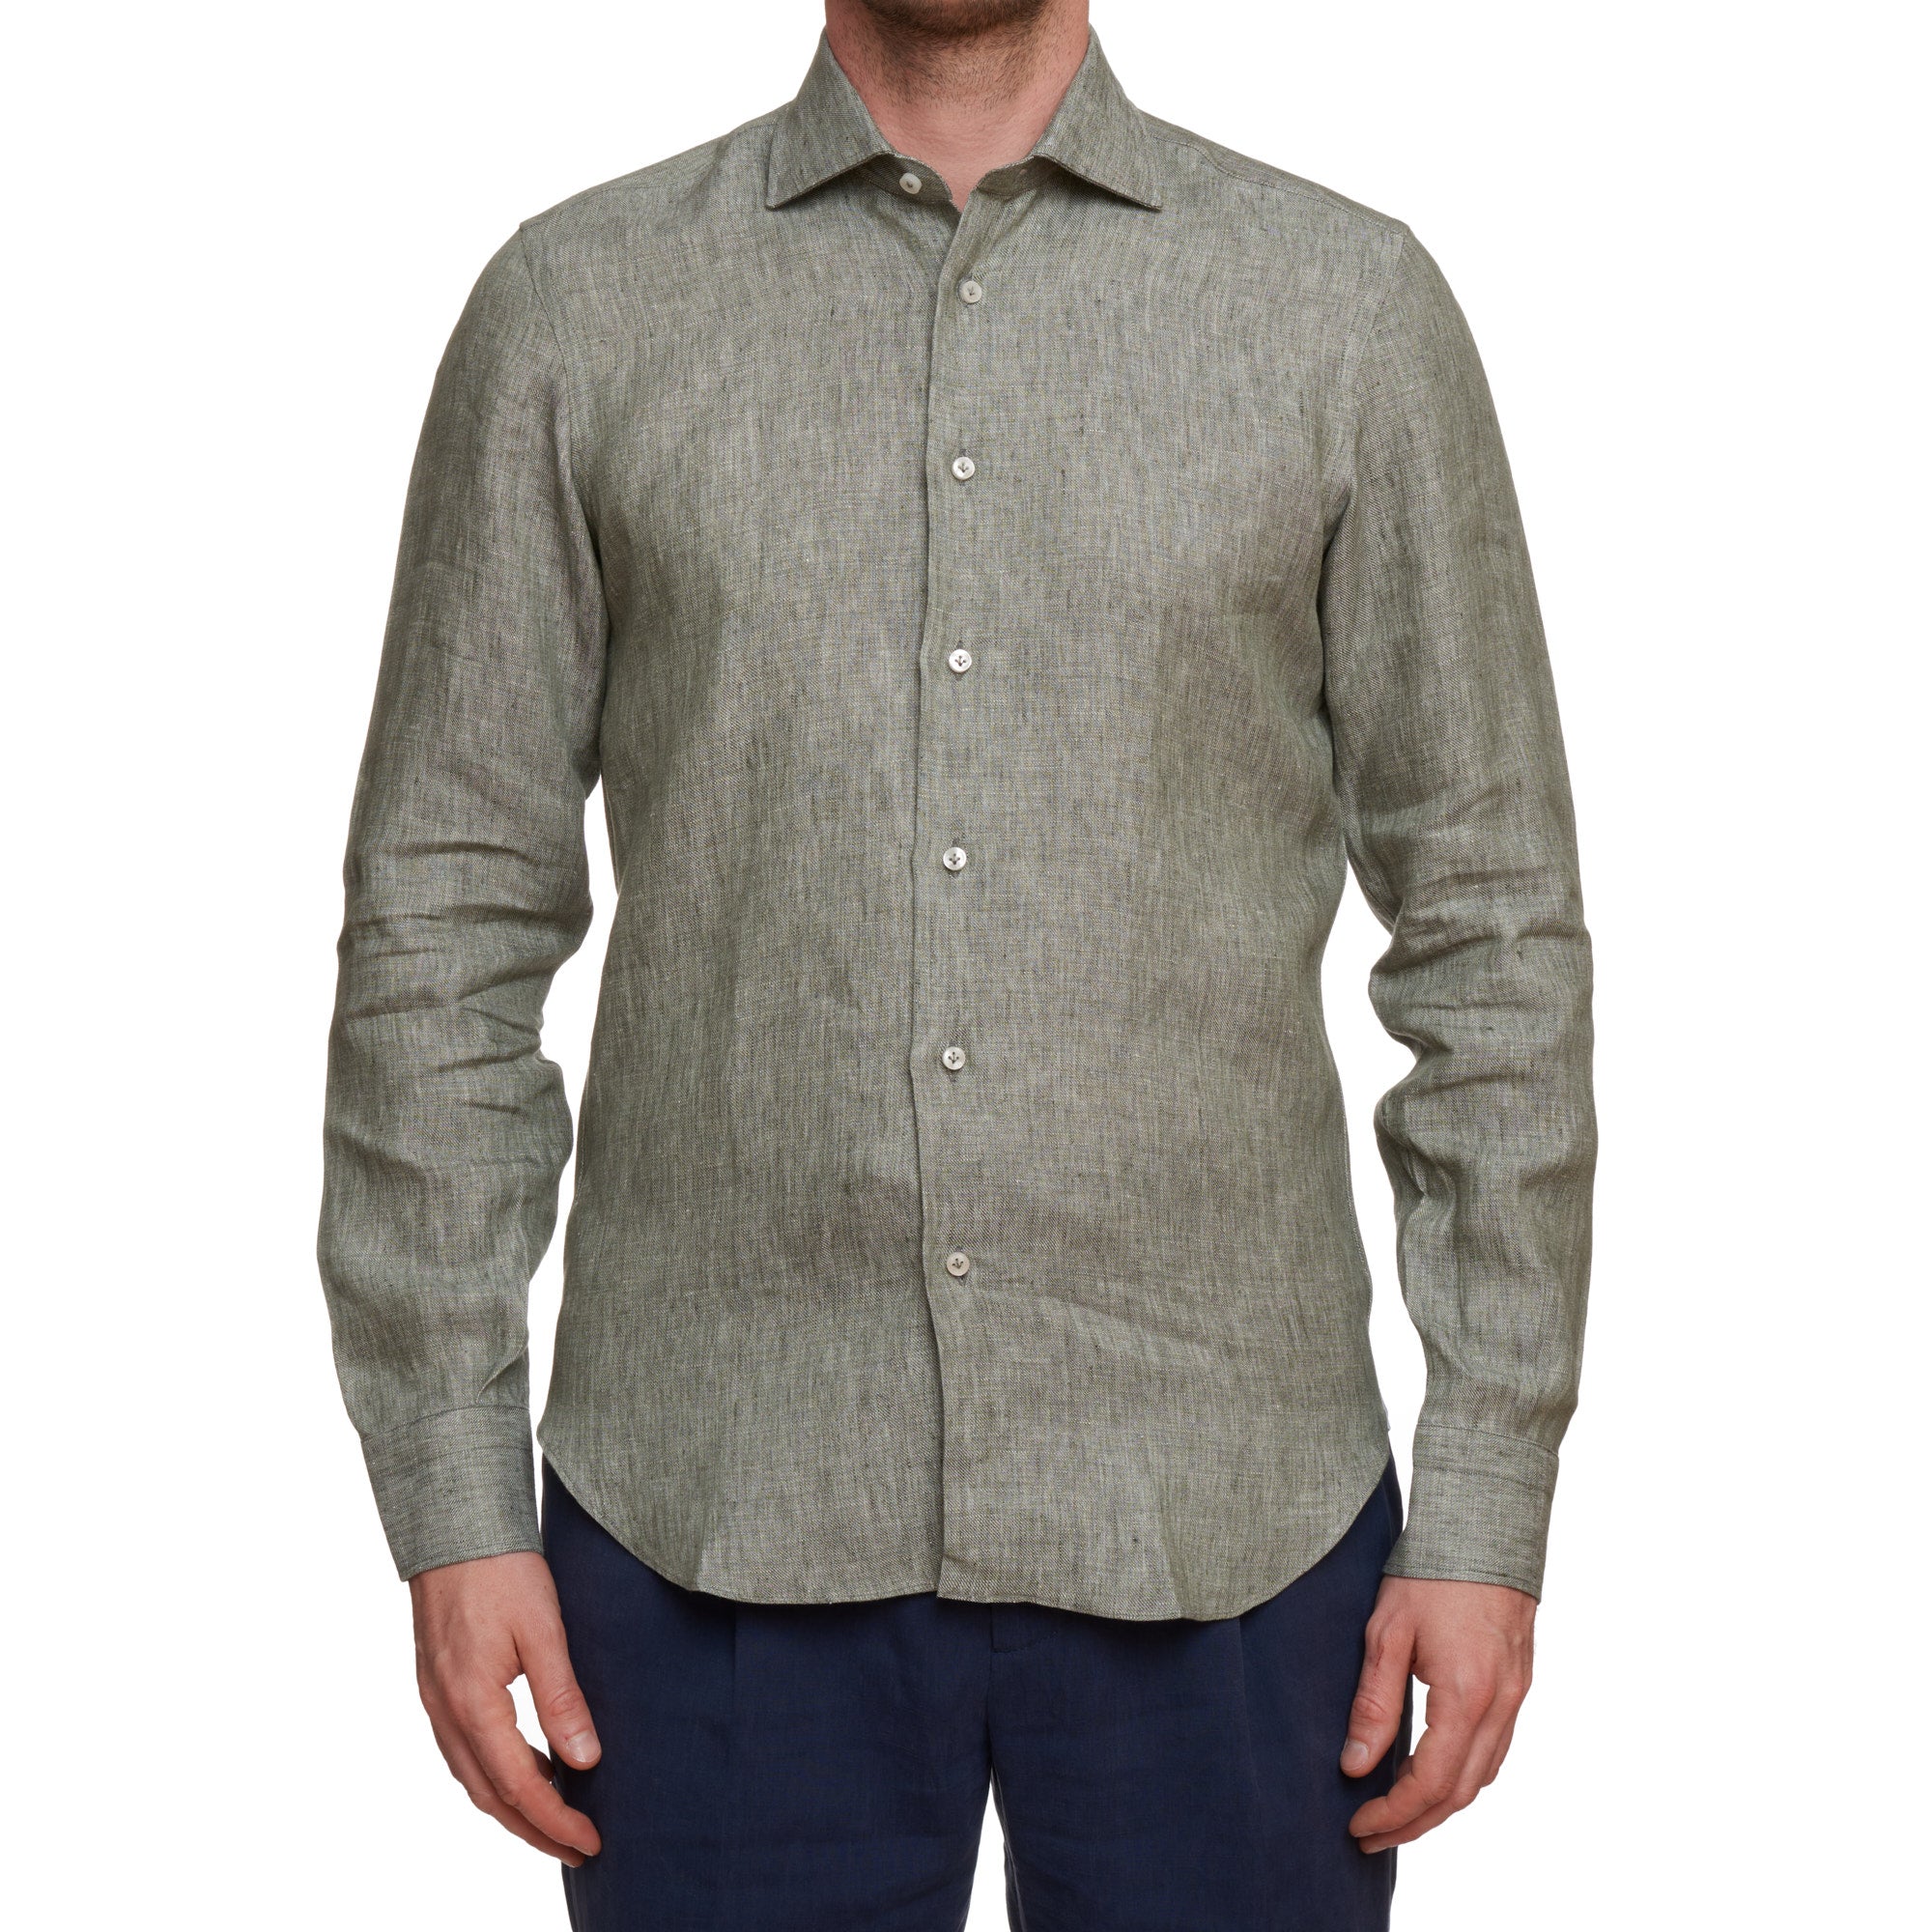 SARTORIO Napoli by KITON Green Linen Spread Collar Shirt Slim Fit NEW SARTORIO